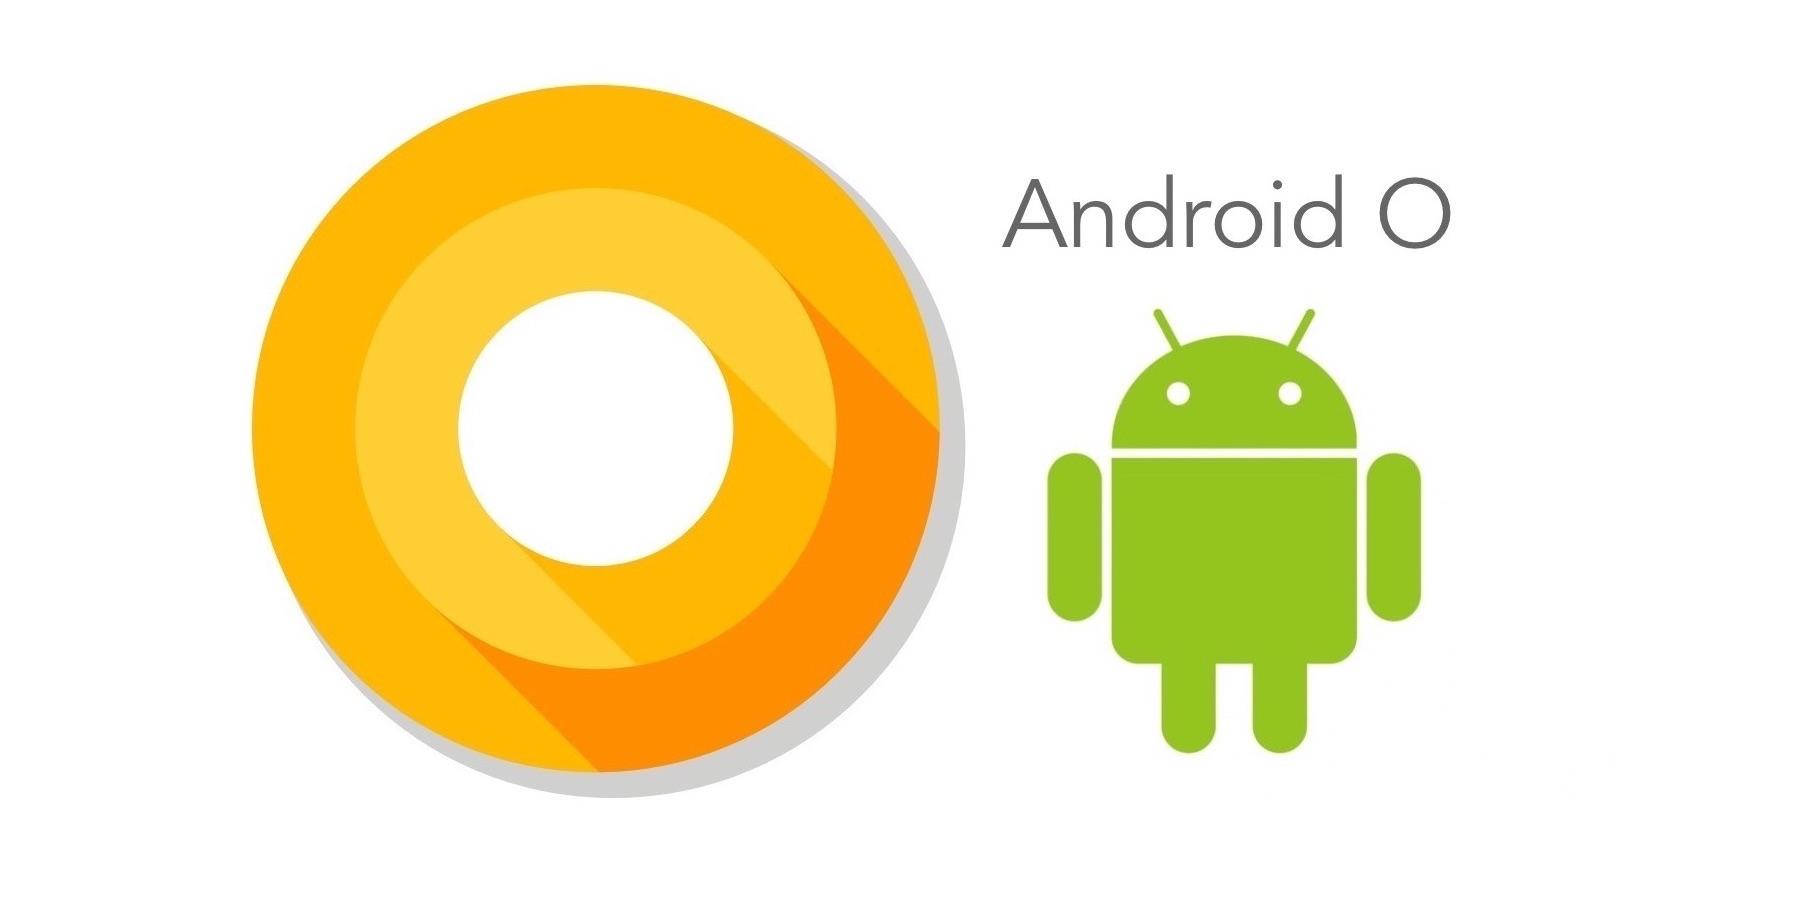 Презентация Android O откладывается